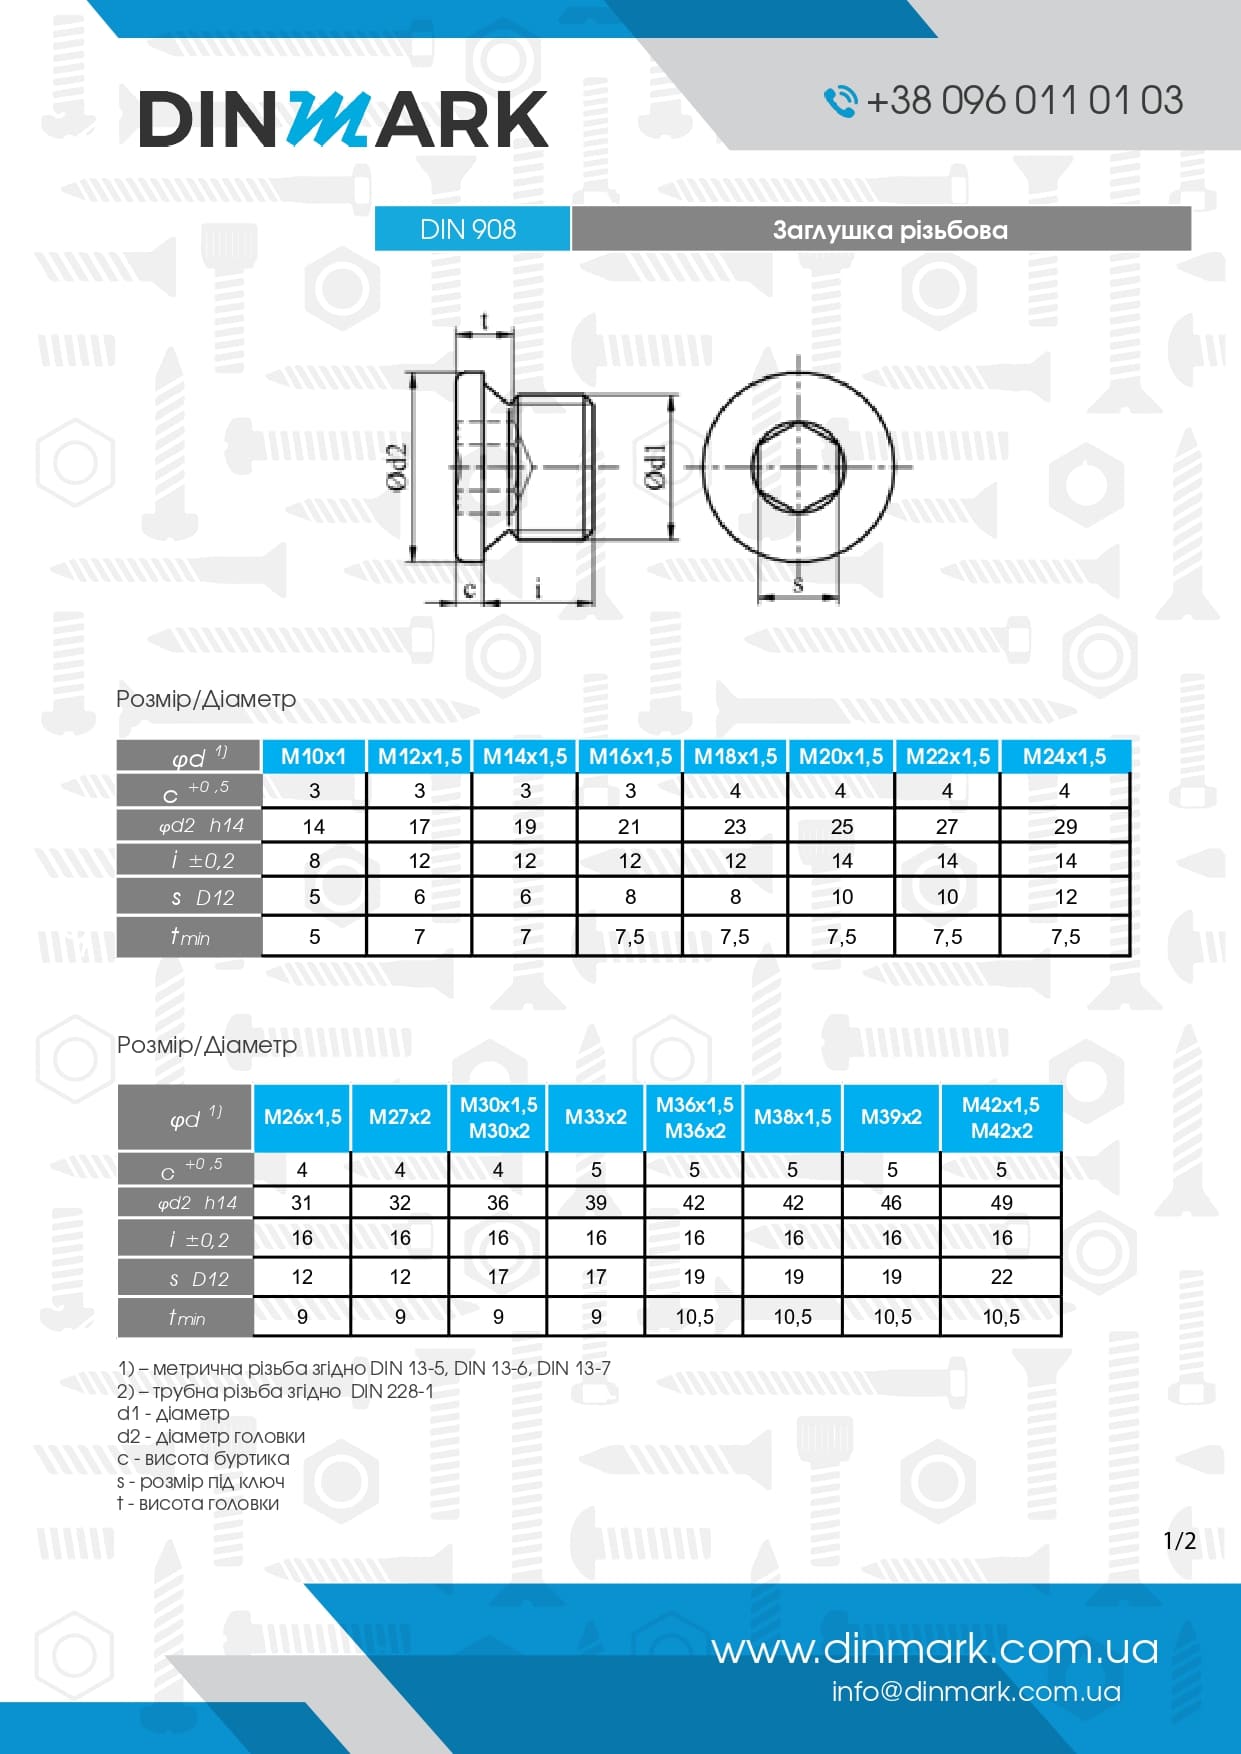 DIN 908 zinc threaded cylindrical Cap with inch thread pdf